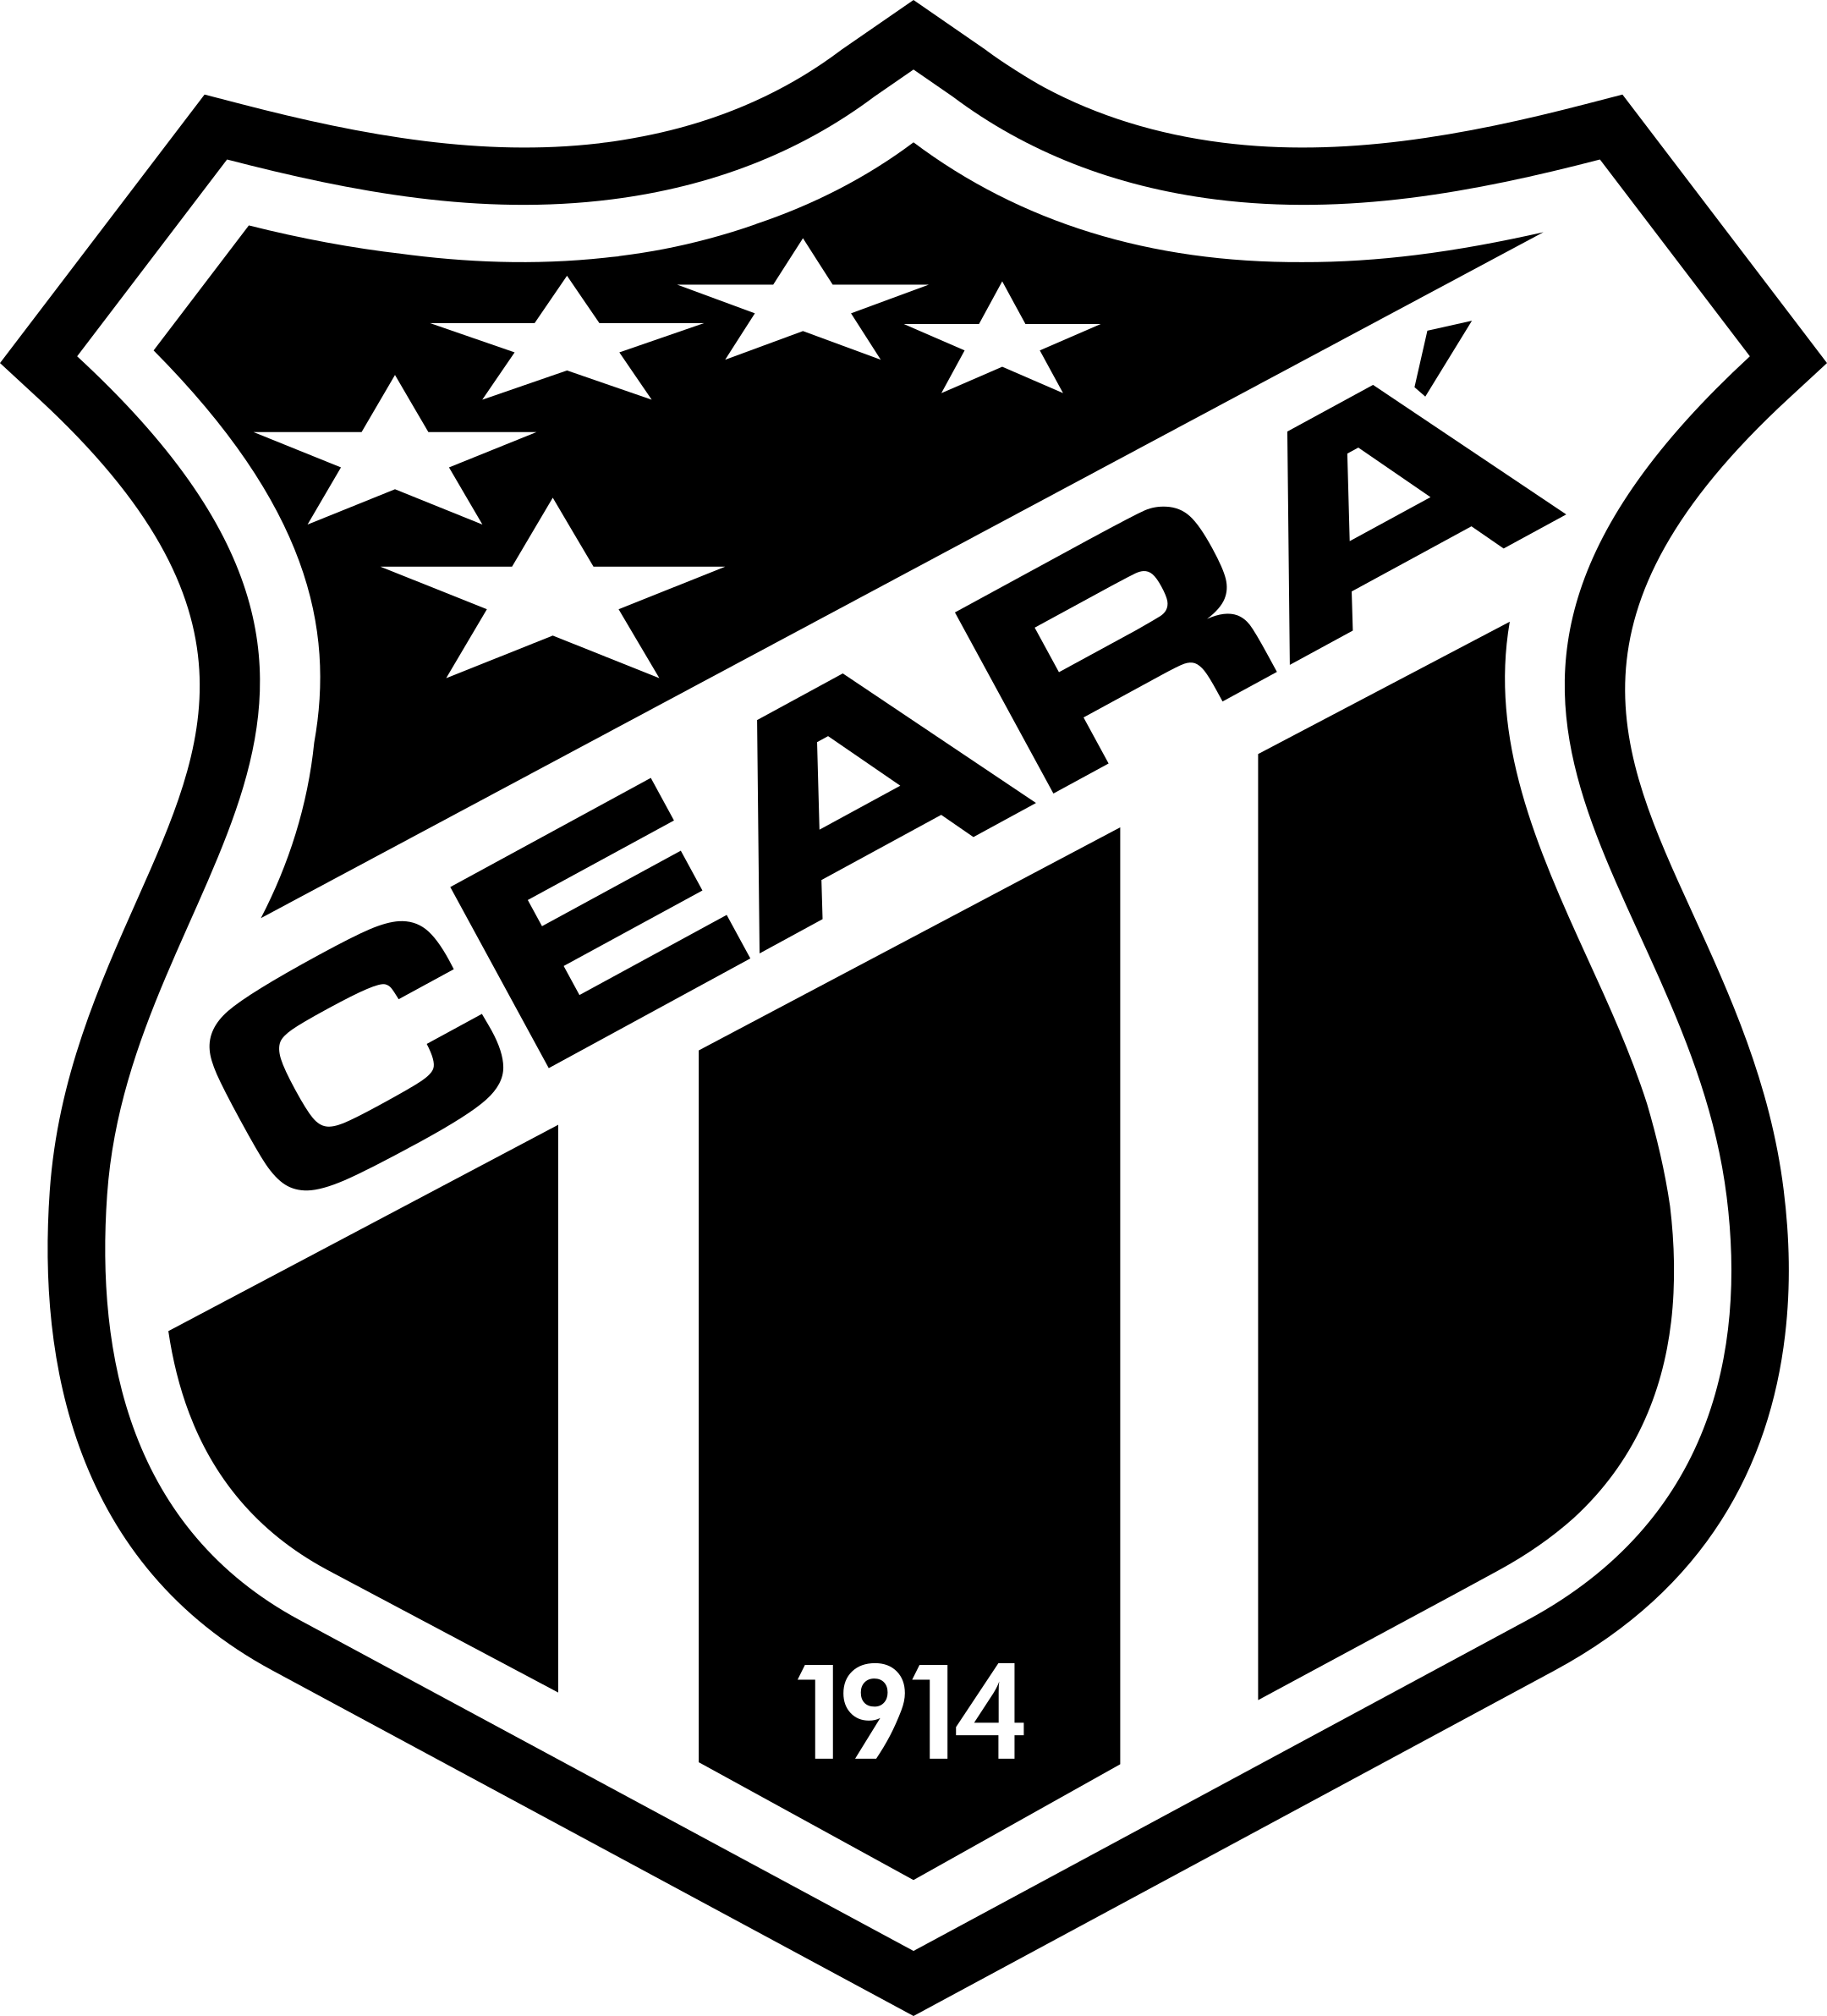 ceara sc logo 1 - Ceará Sporting Club Logo